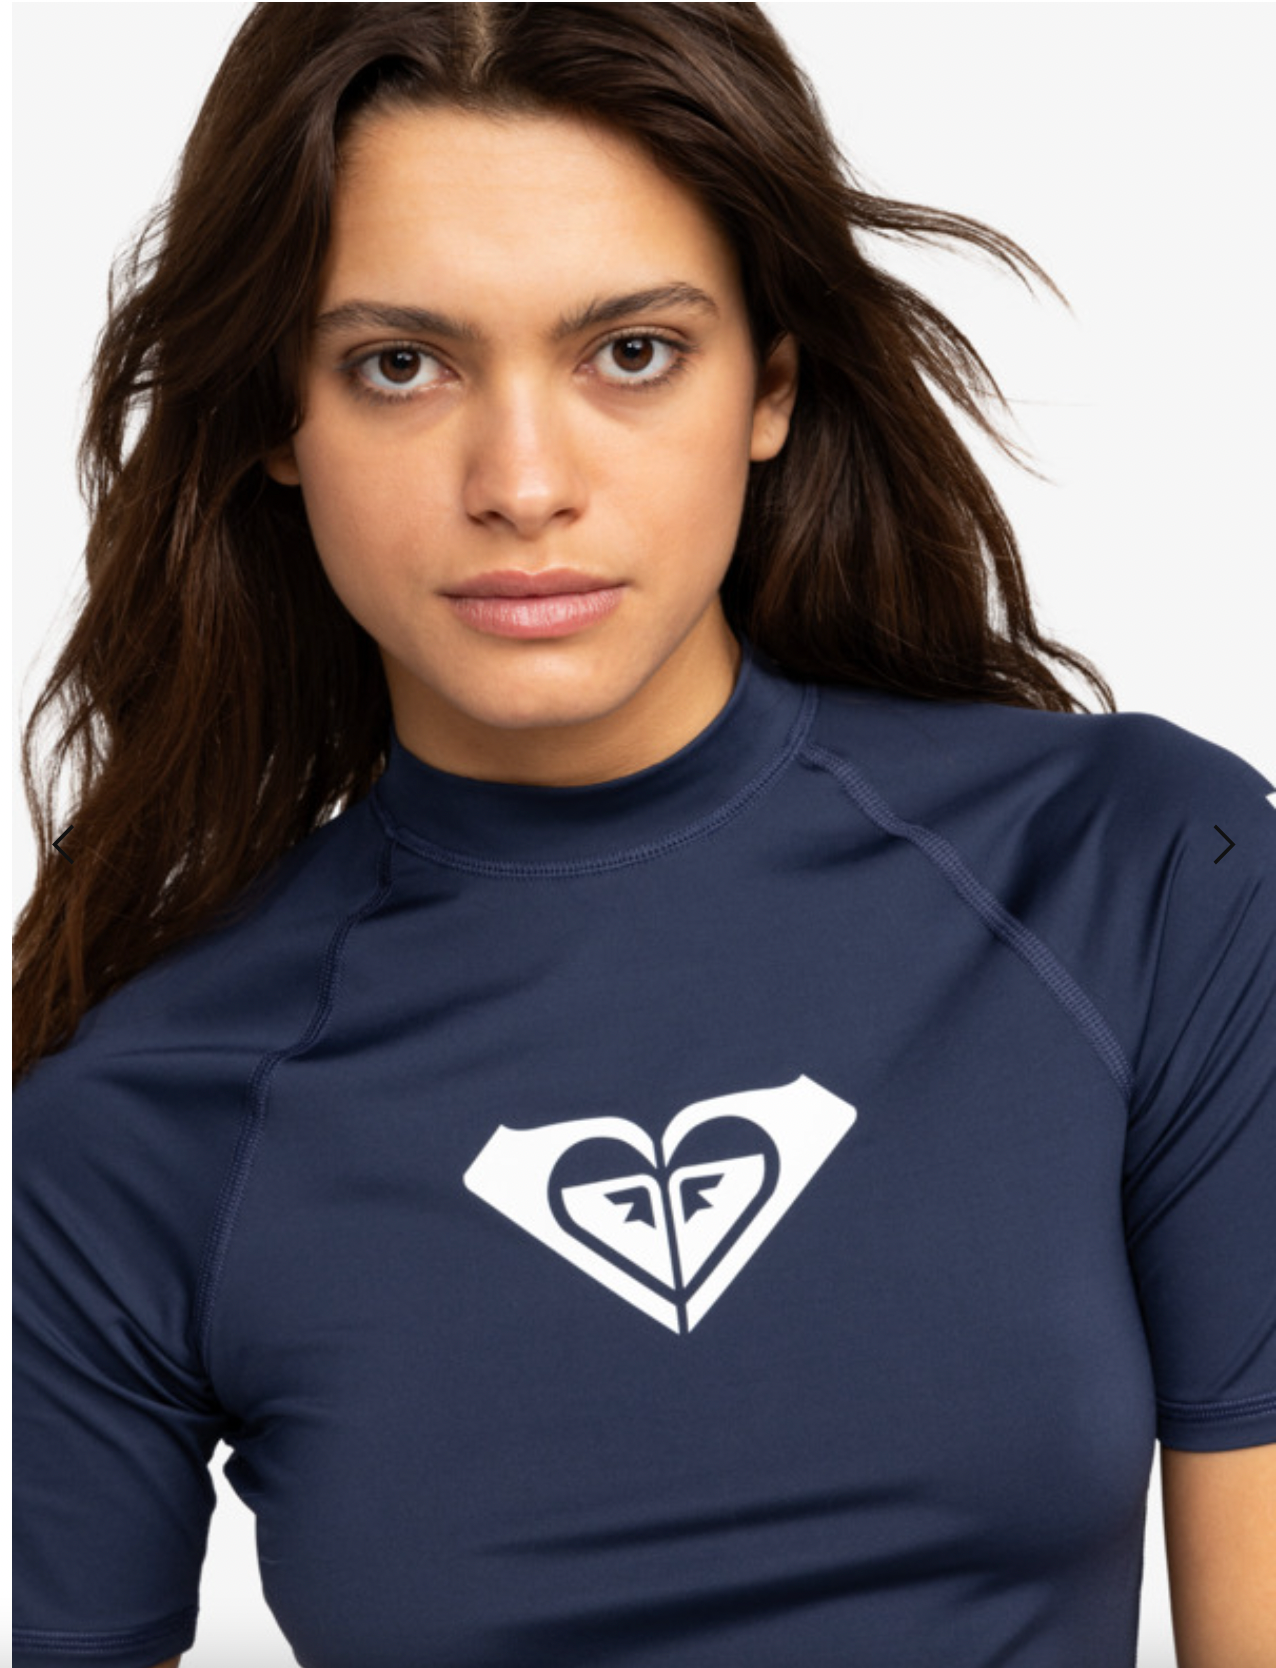 ROXY Whole Hearted - Short Sleeve UPF 50 Rash Vest for Women